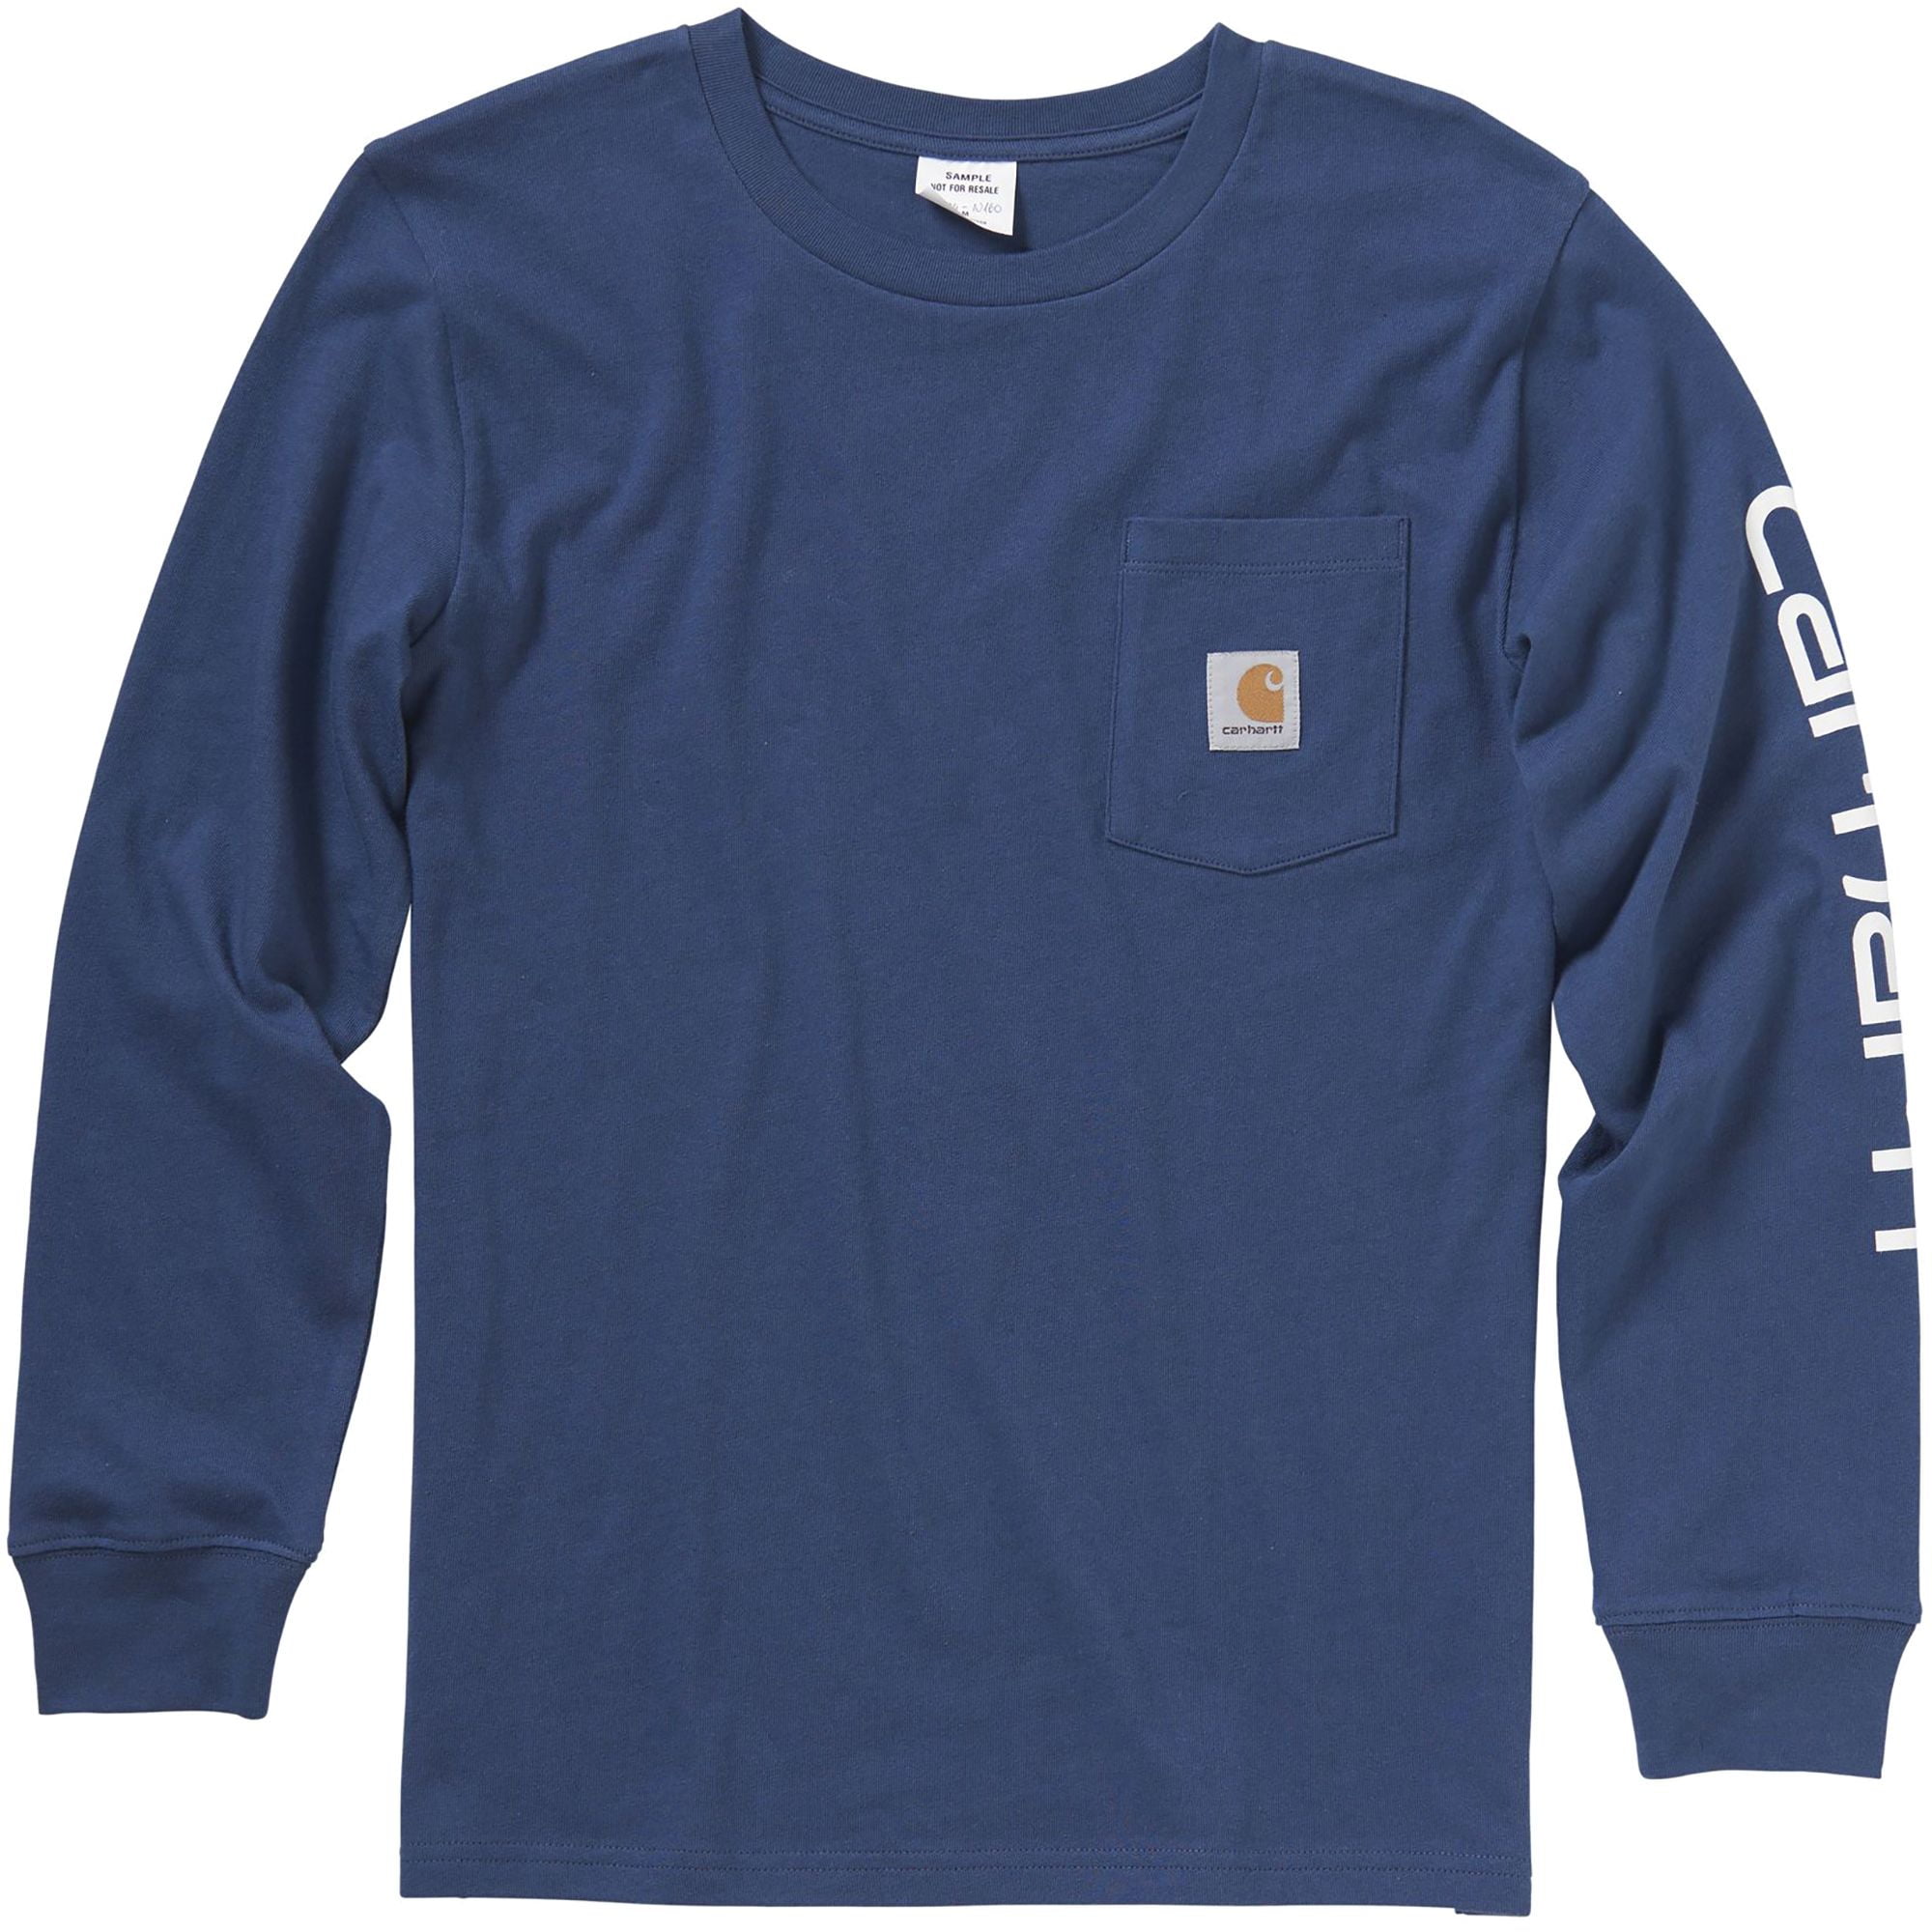 Carhartt Boys' Long Sleeve Pocket Logo T-Shirt - Walmart.com - Walmart.com